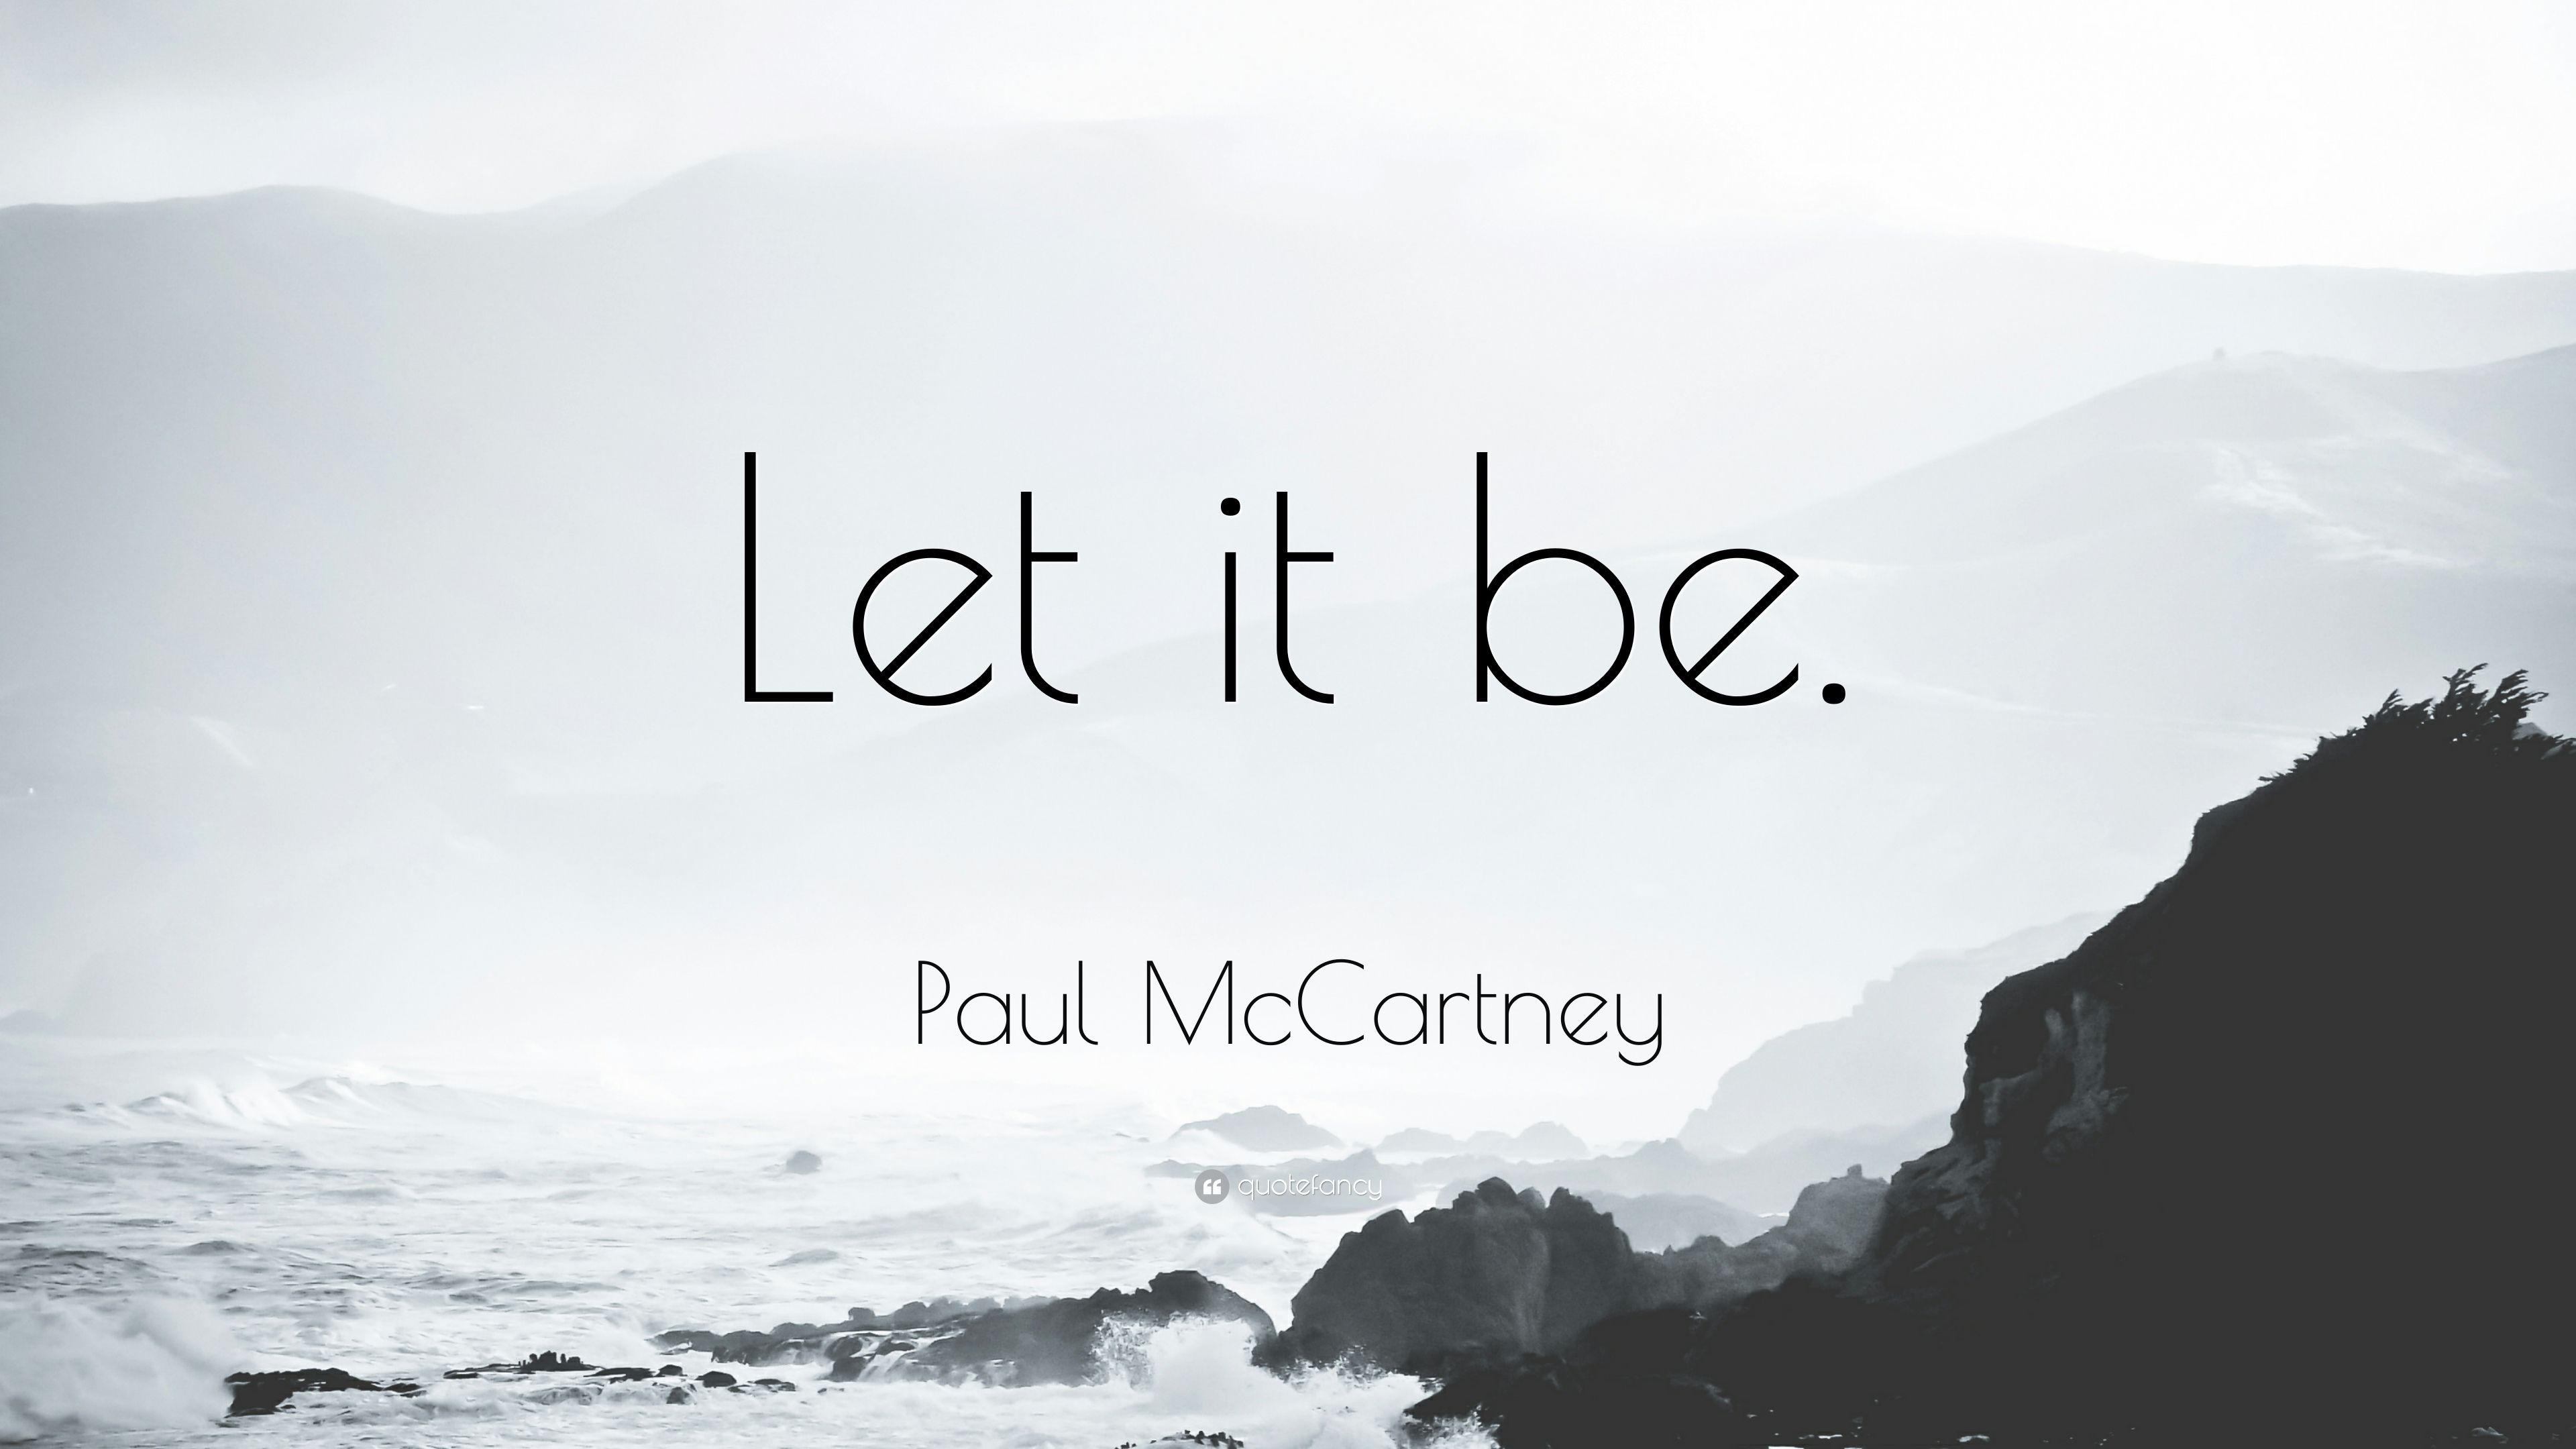 Paul McCartney Quote: “Let it be.” (9 wallpaper)